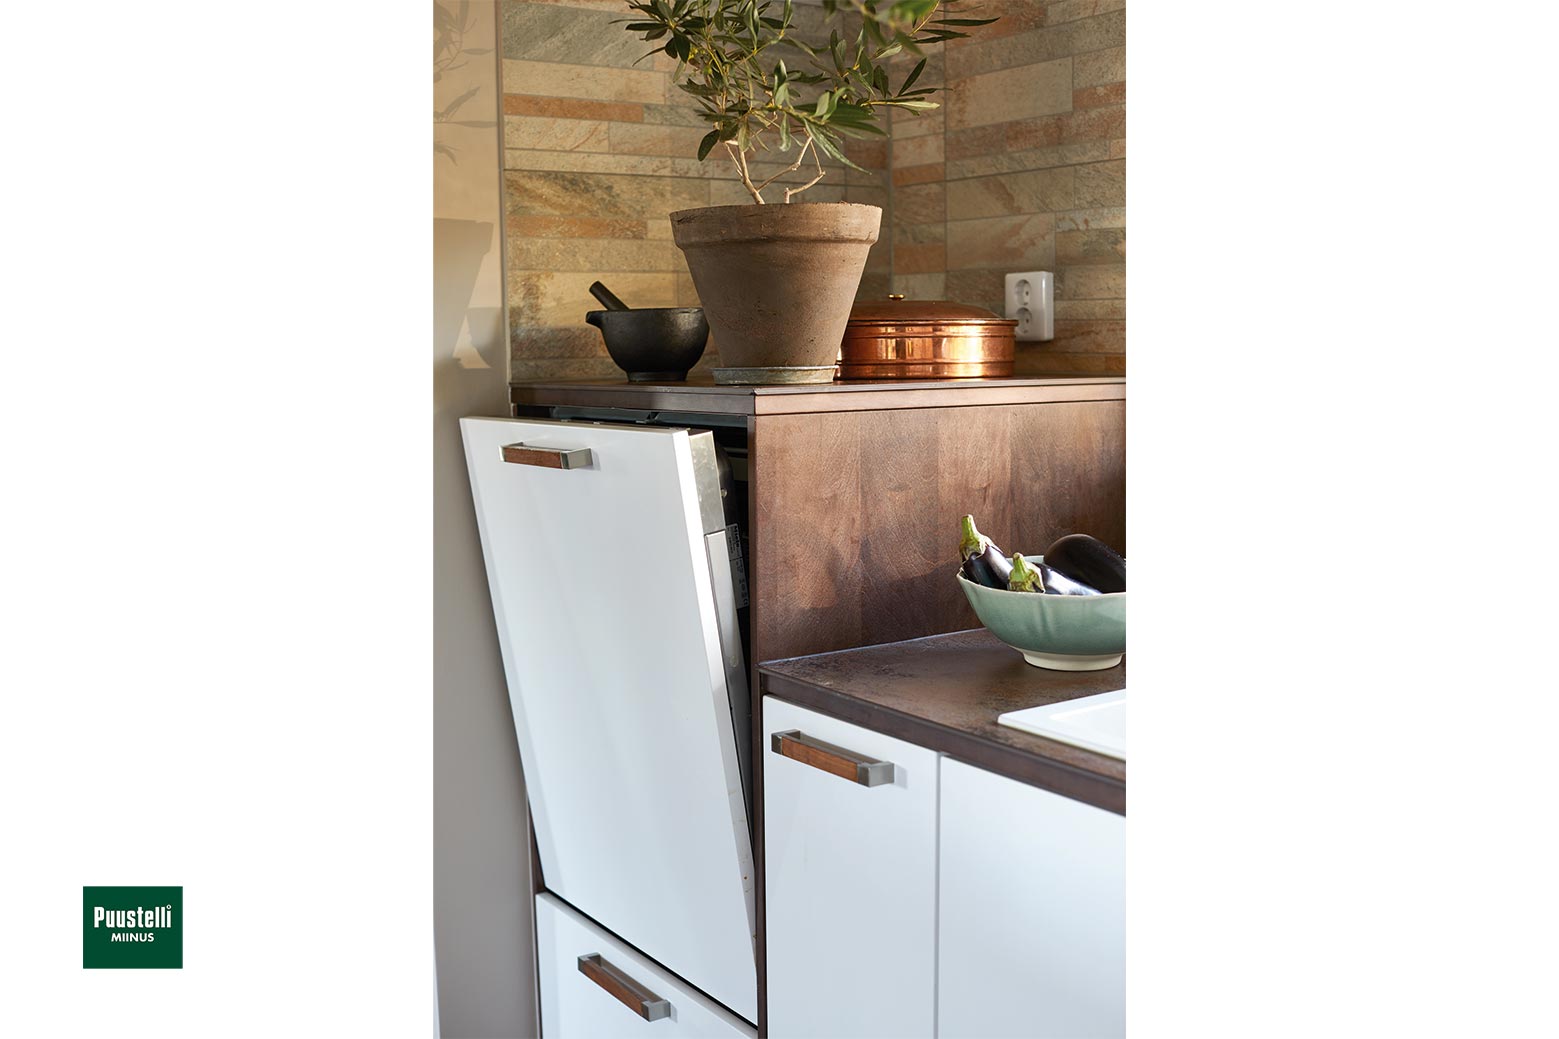 Puustelli Miinus ecological kitchen in white and lacquered dark brown birch veneer raised dishwahser